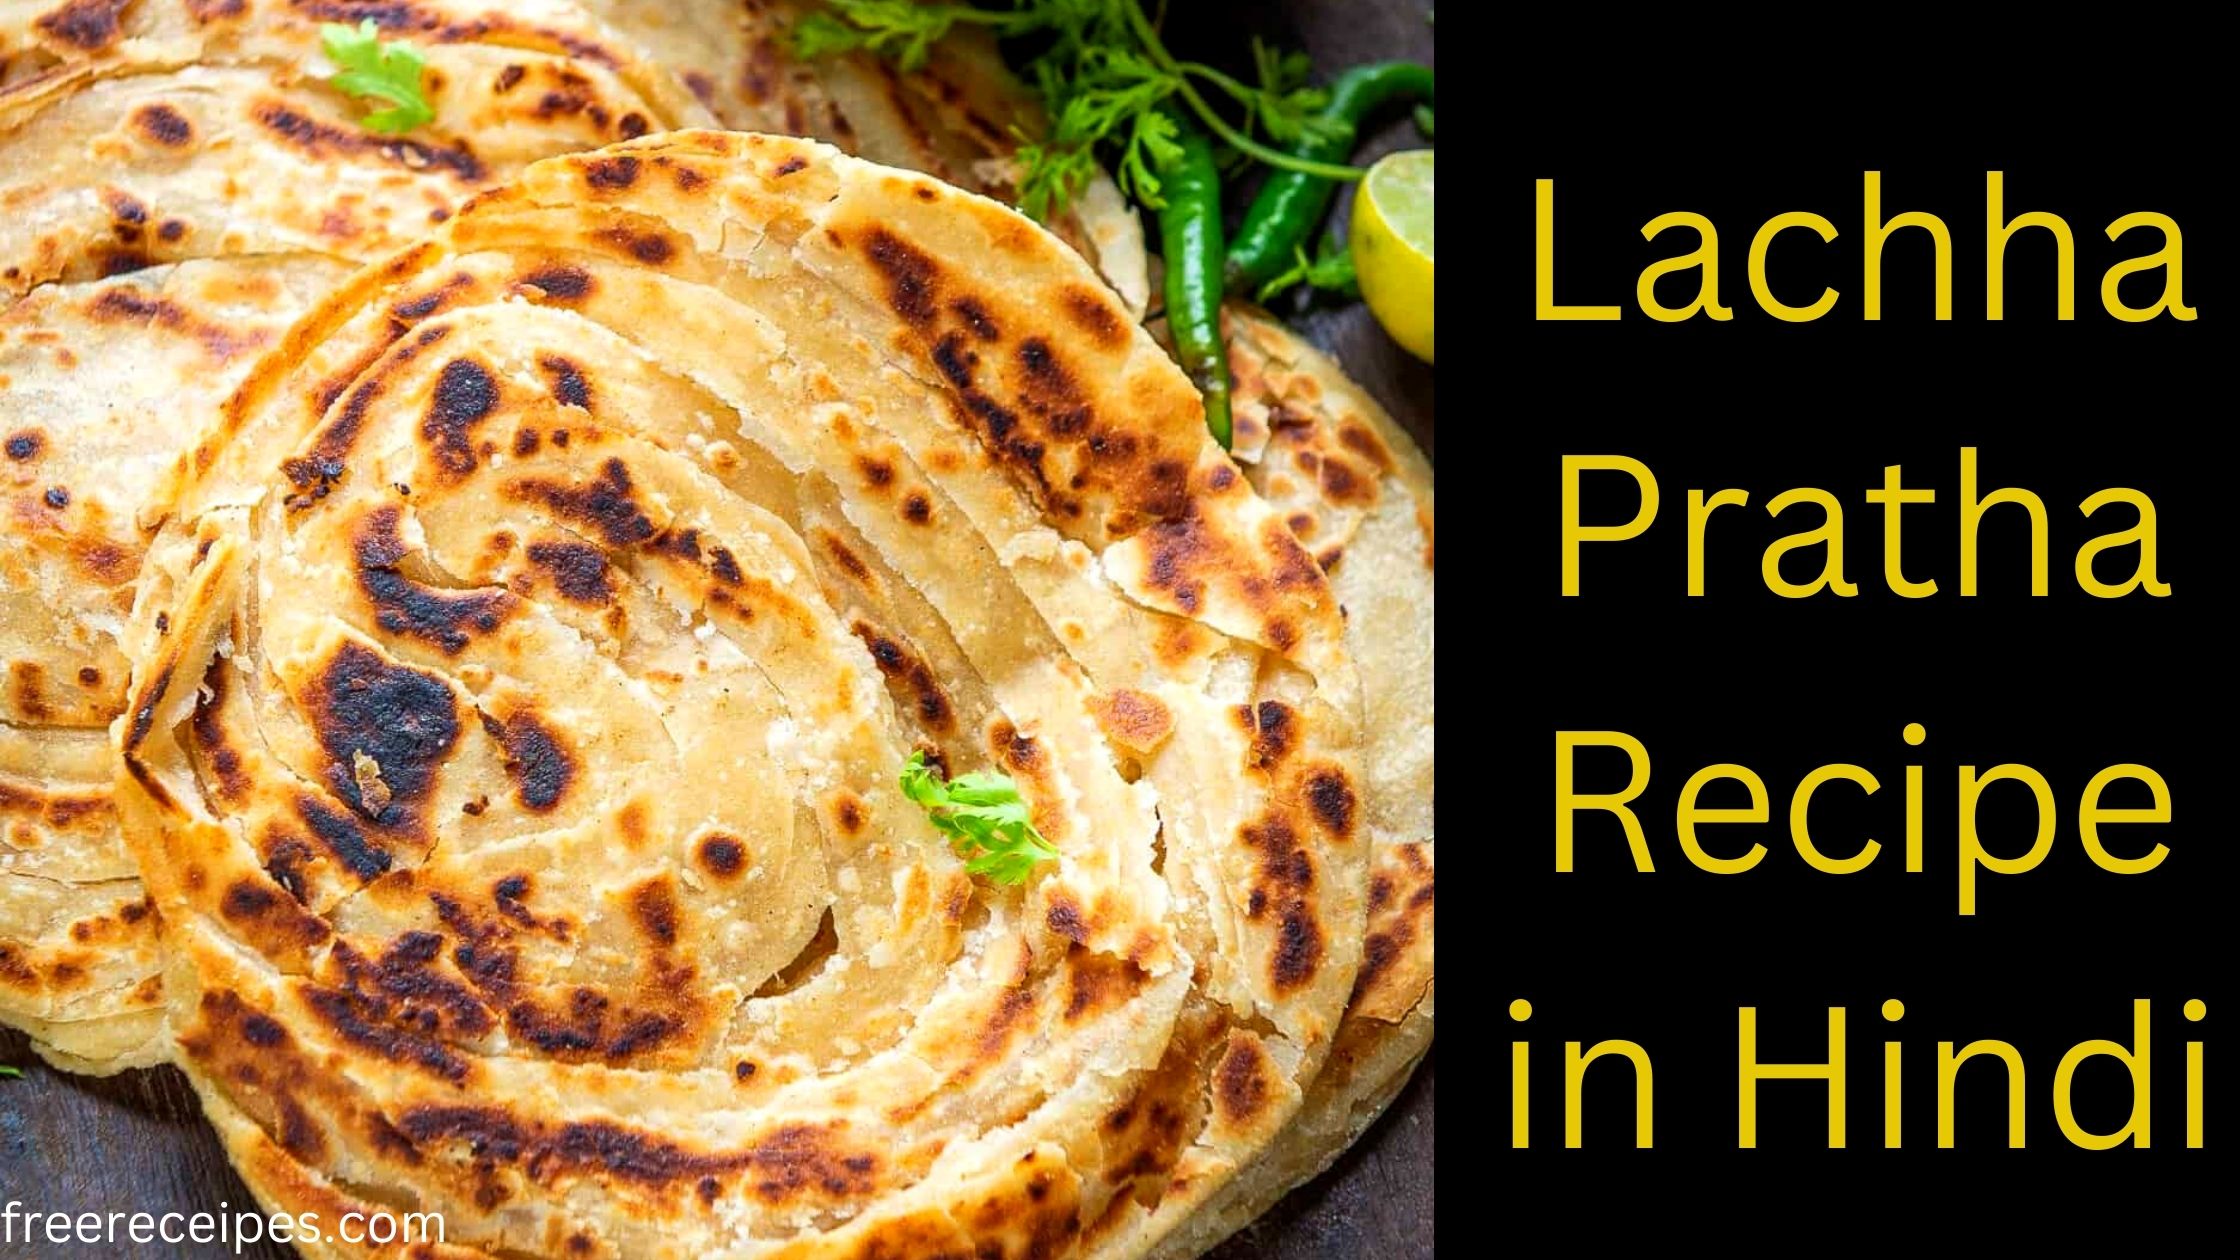 Lachha Pratha Recipe in Hindi